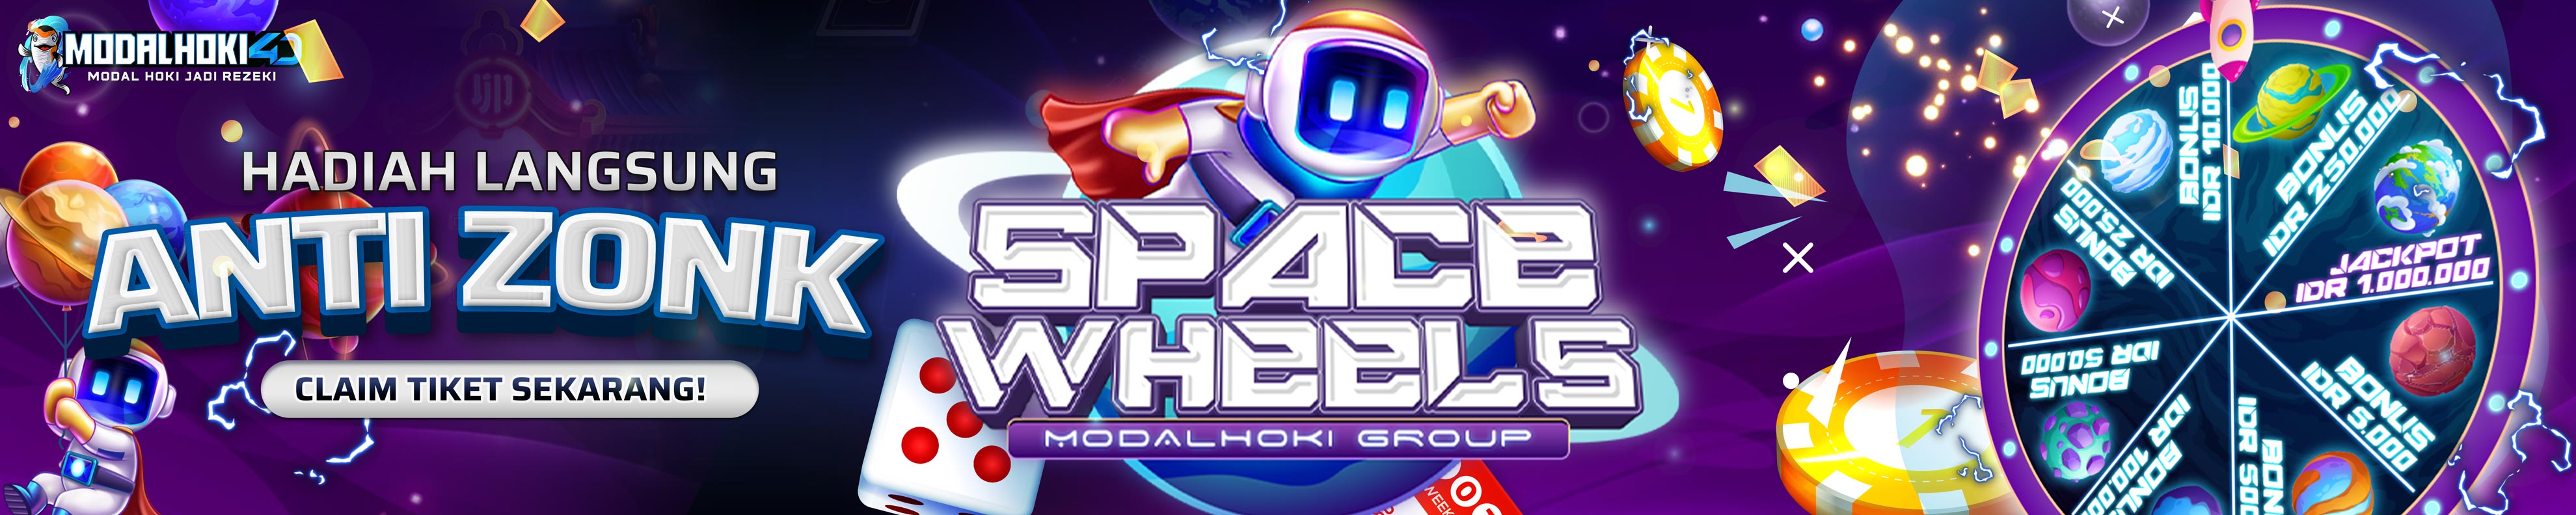 Spacewheel MODALHOKI